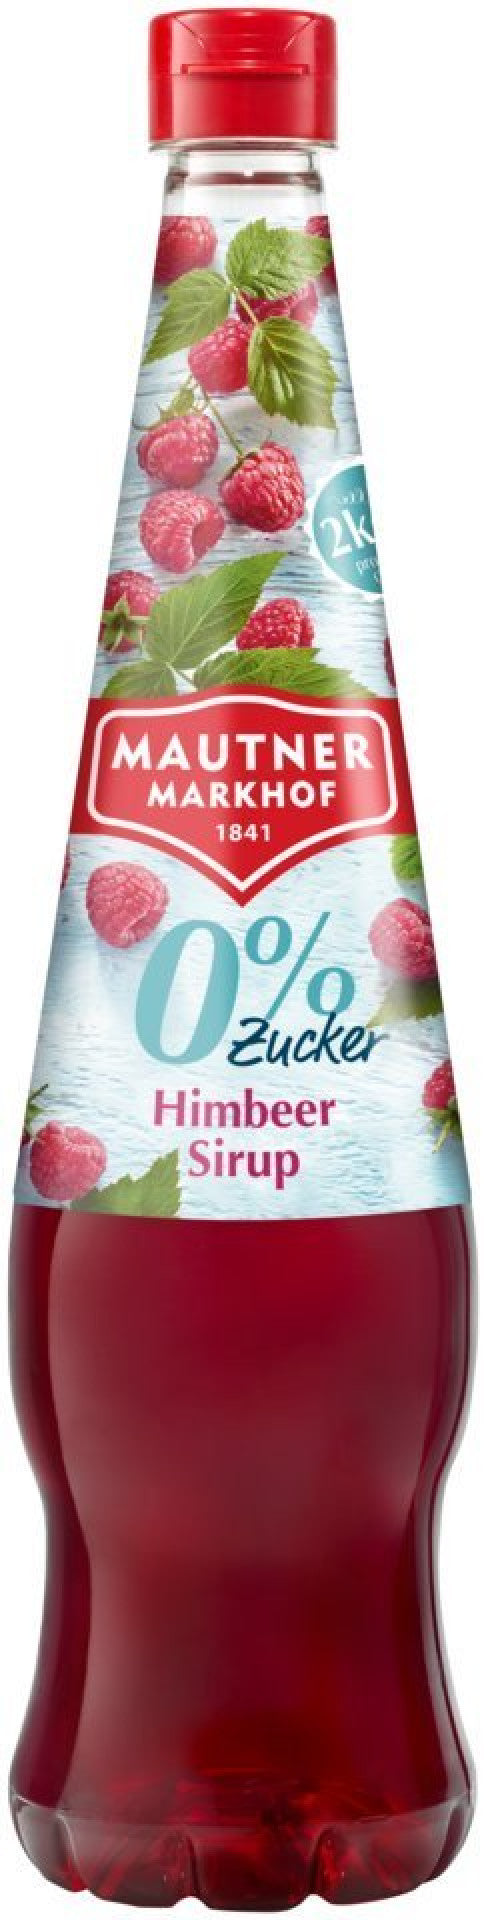 Mautner Markhof 0% Zucker Sirup Himbeere